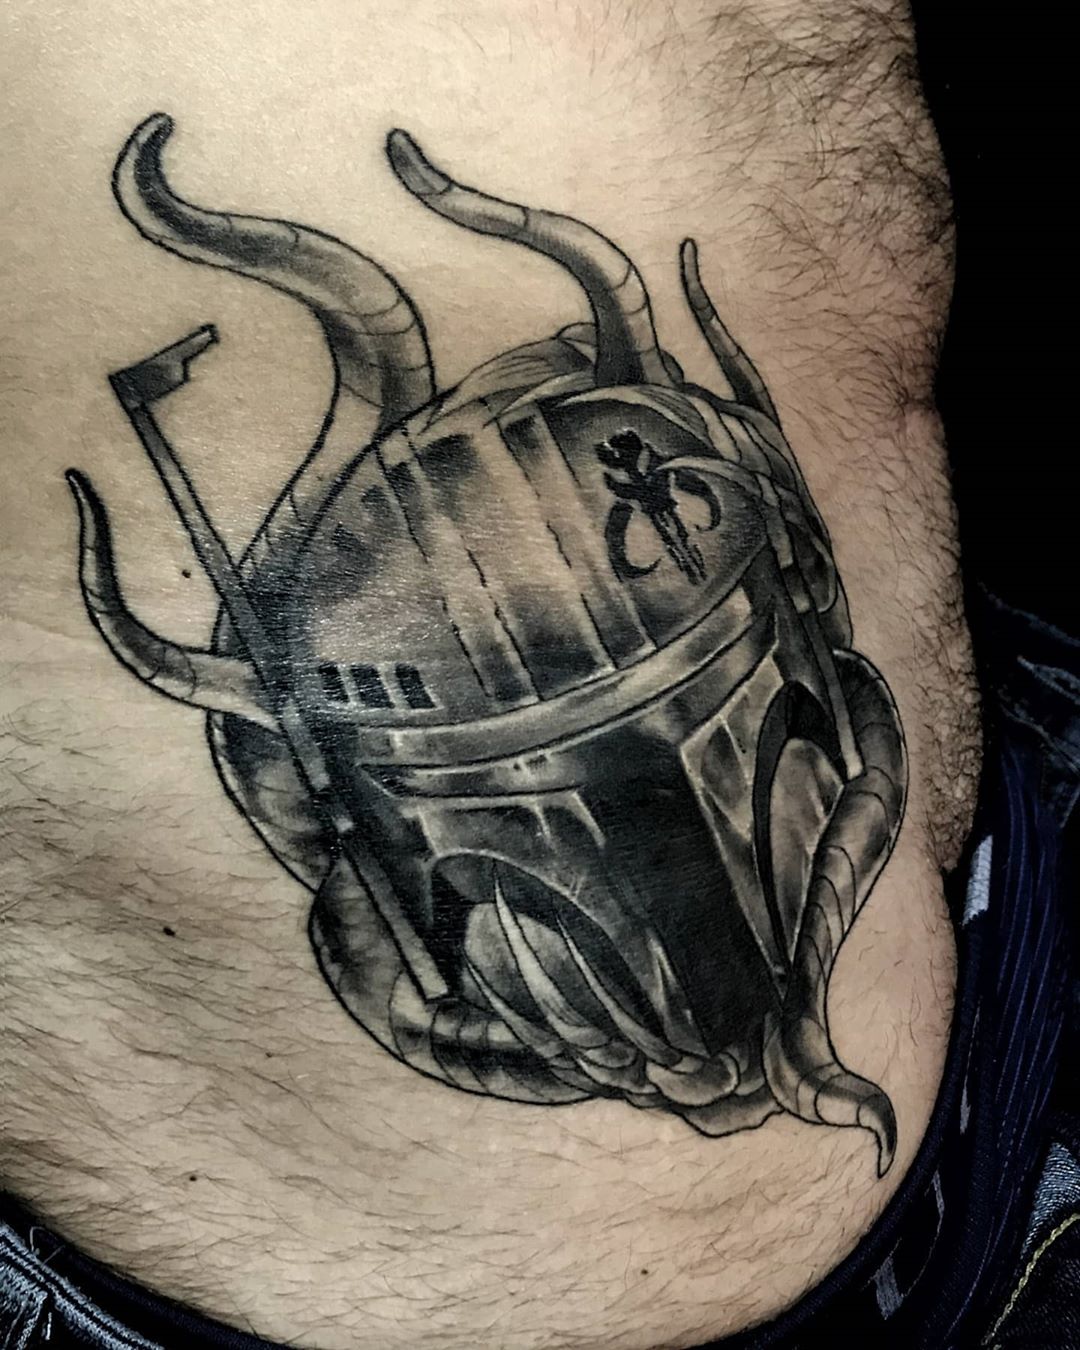 Mandalorian with tentacles tattoo